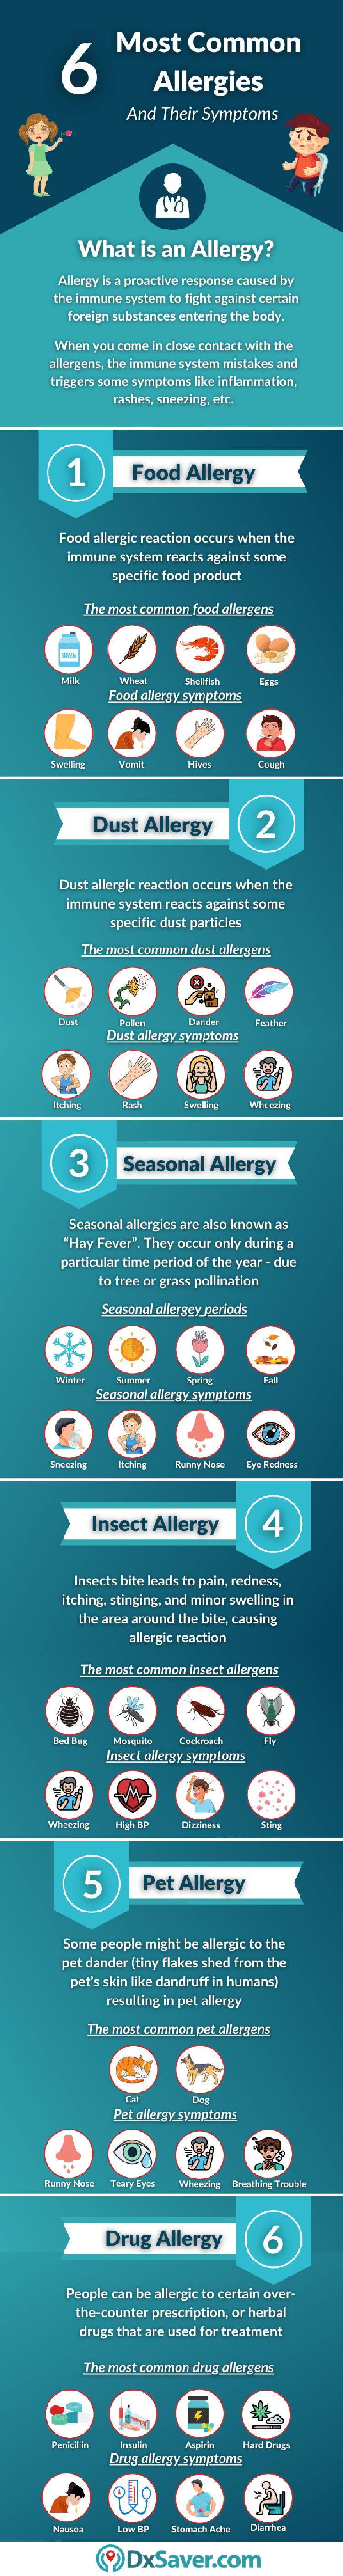 6 Common Types of Allergies